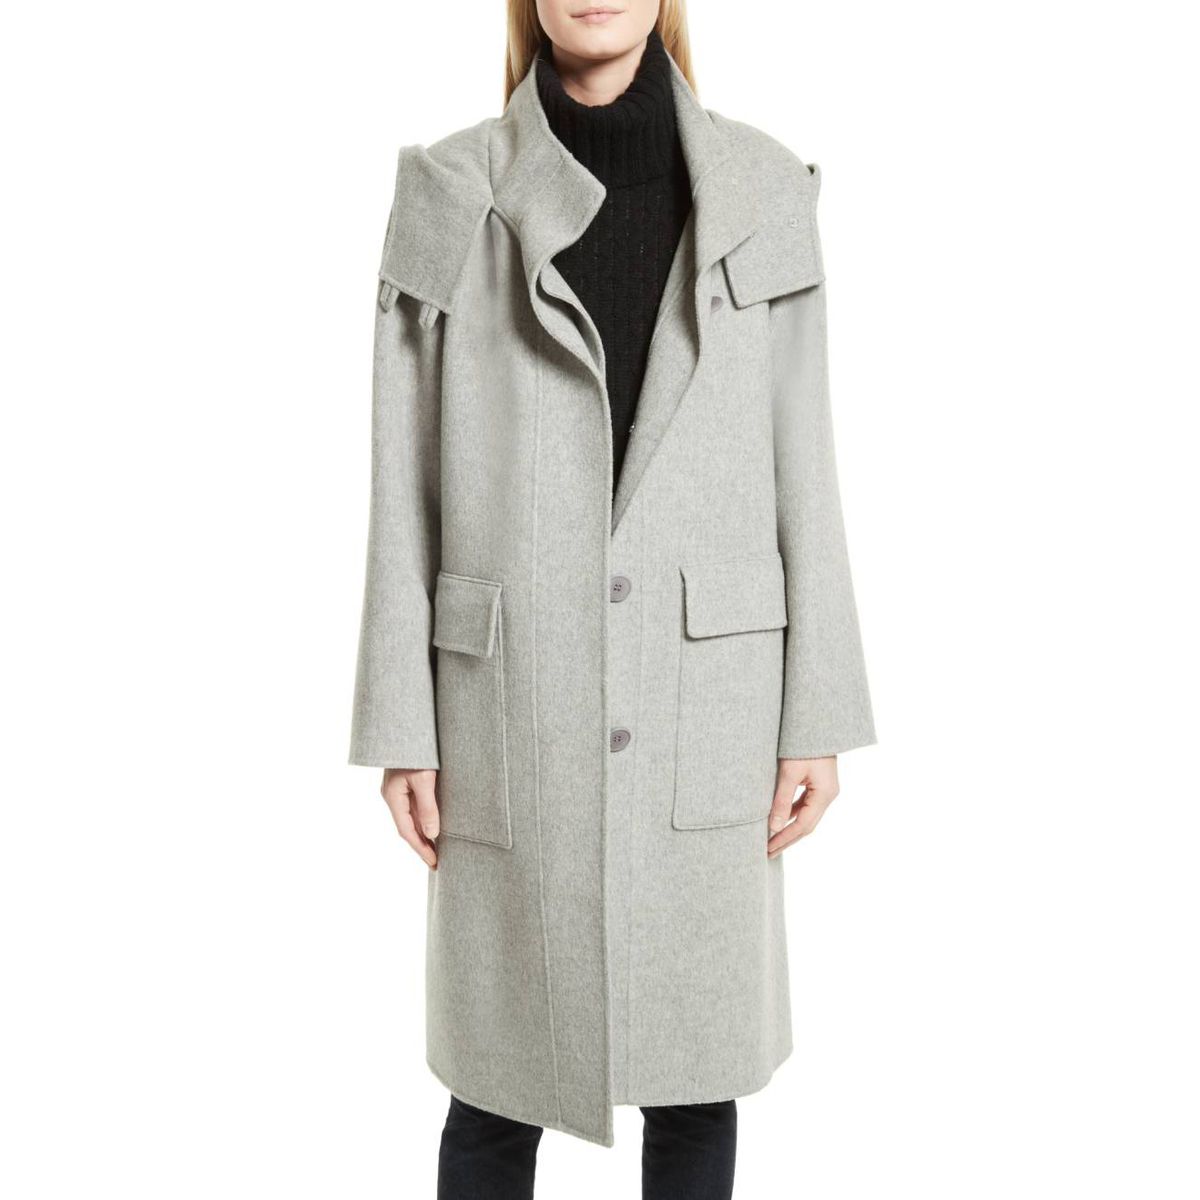 Warm Winter Coats That Aren't Puffer Coats | InStyle